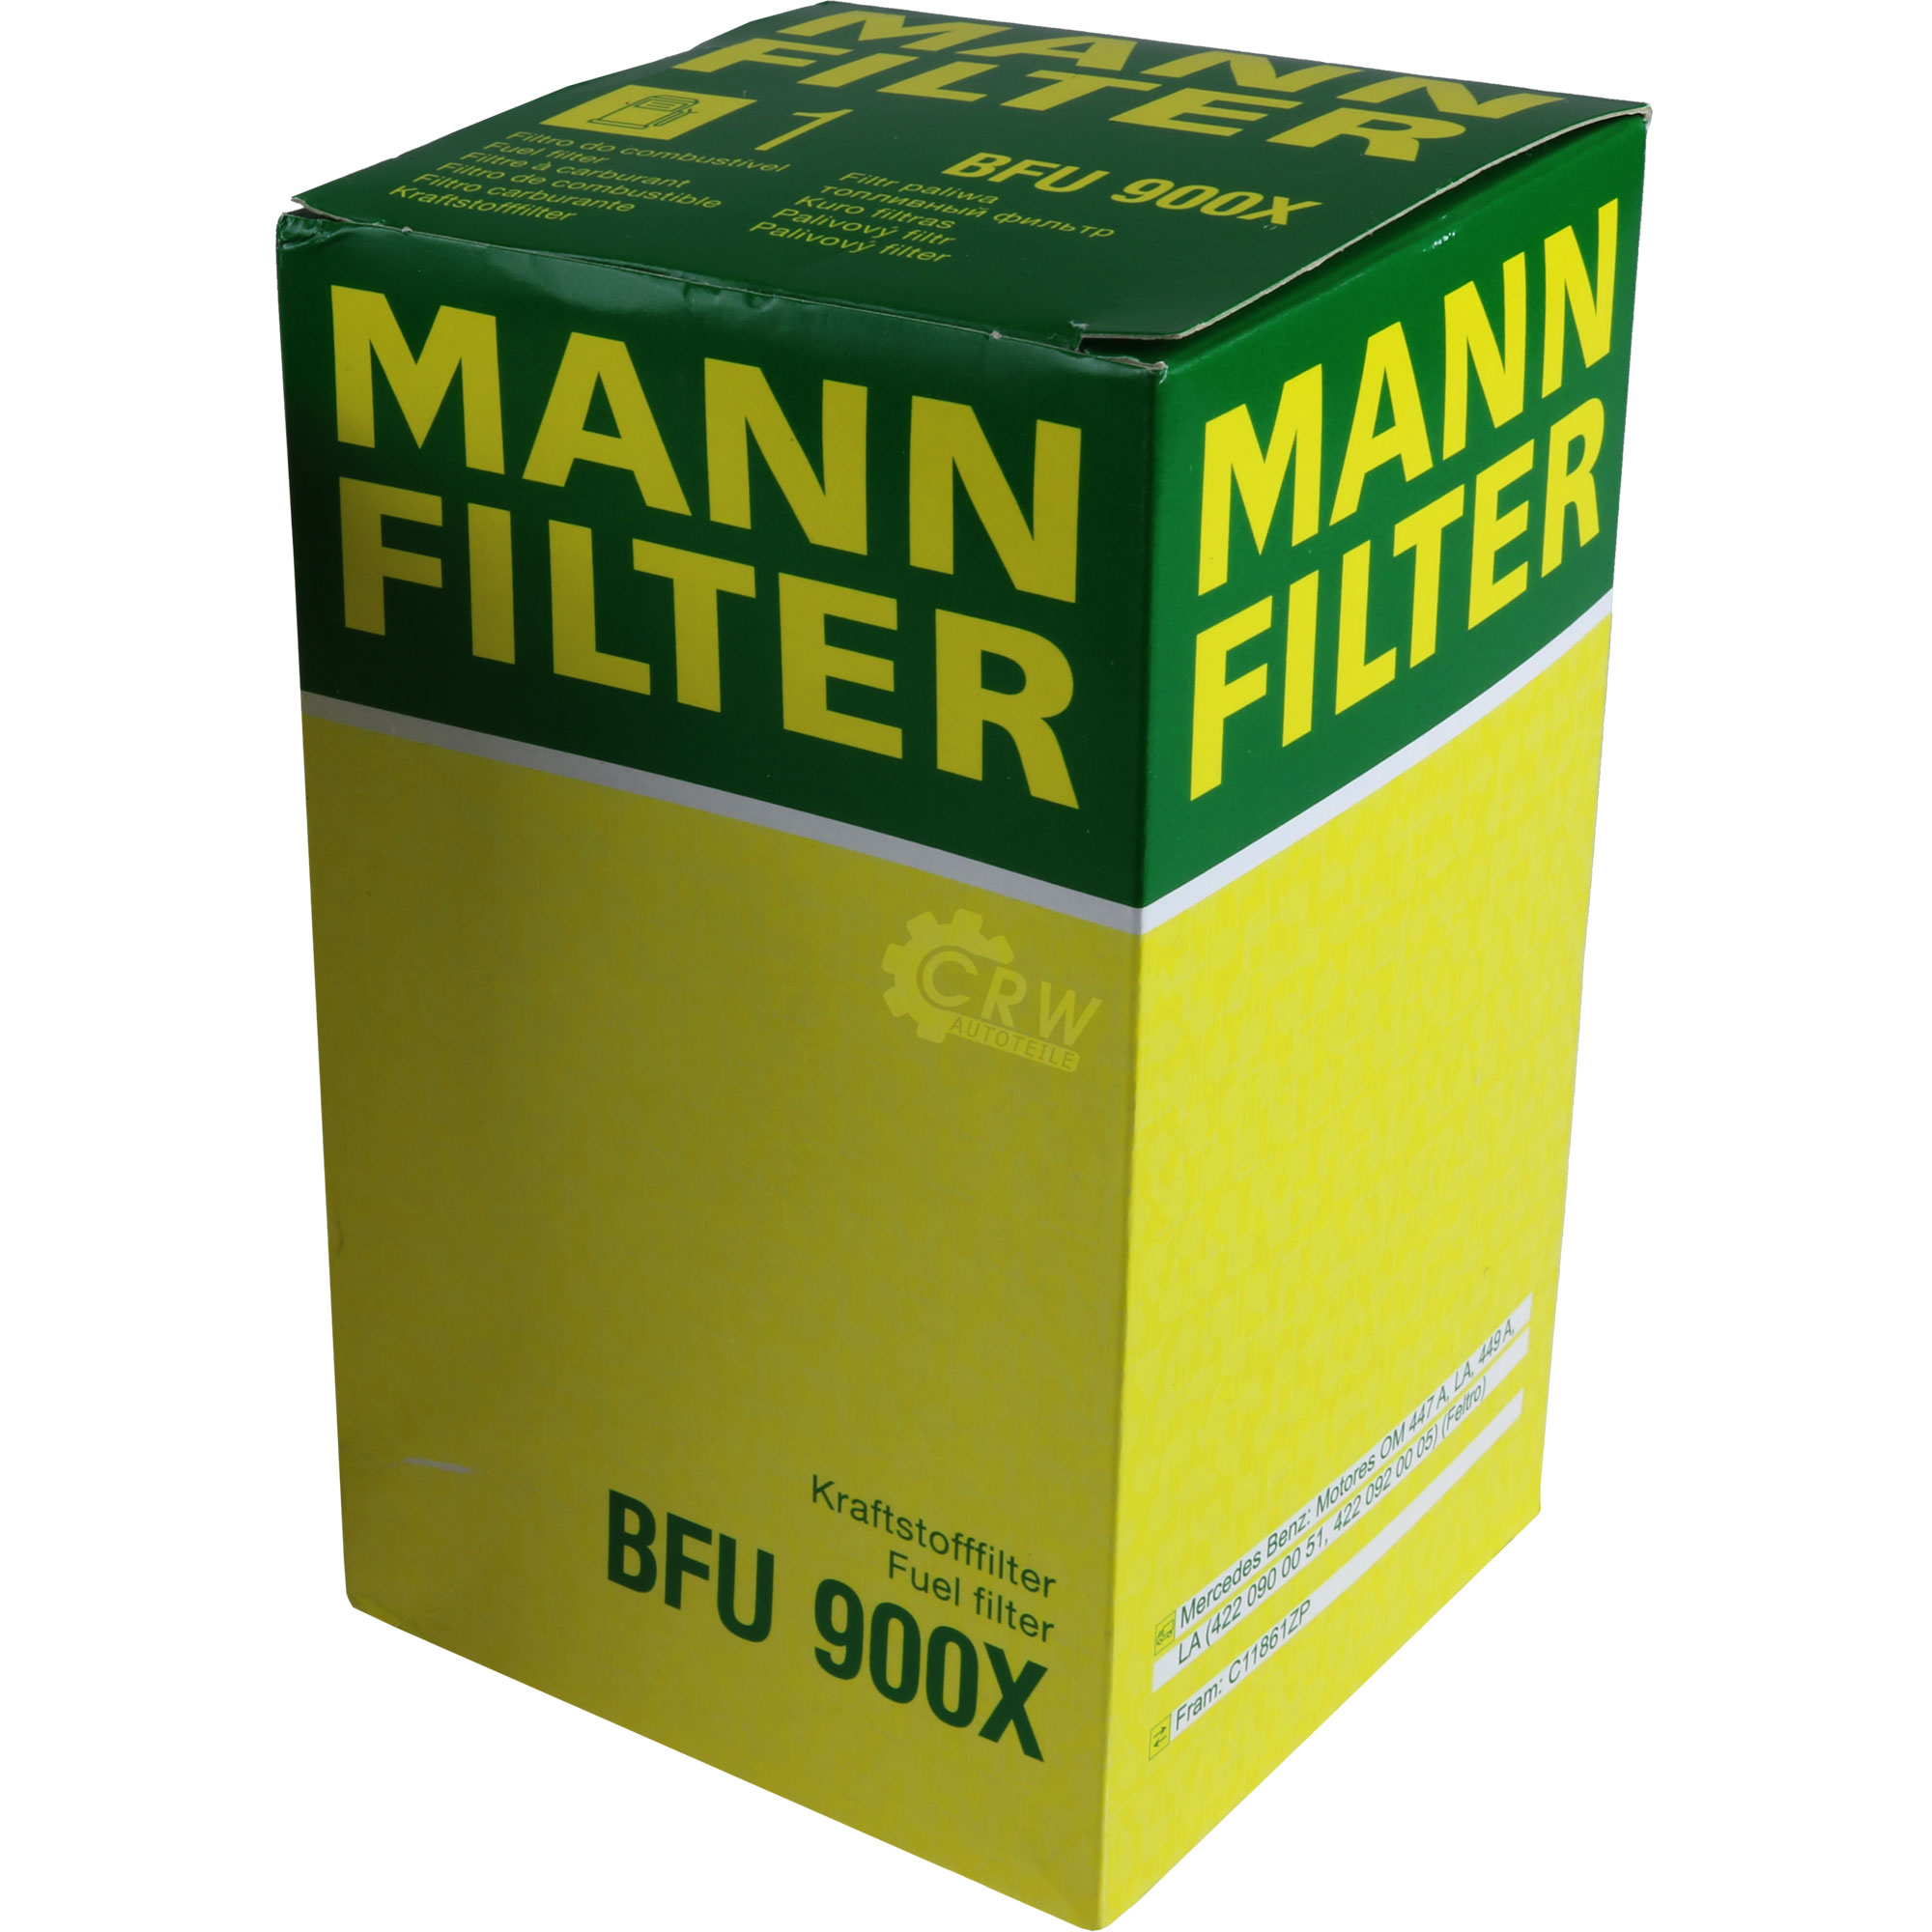 MANN-FILTER Kraftstofffilter BFU 900 x